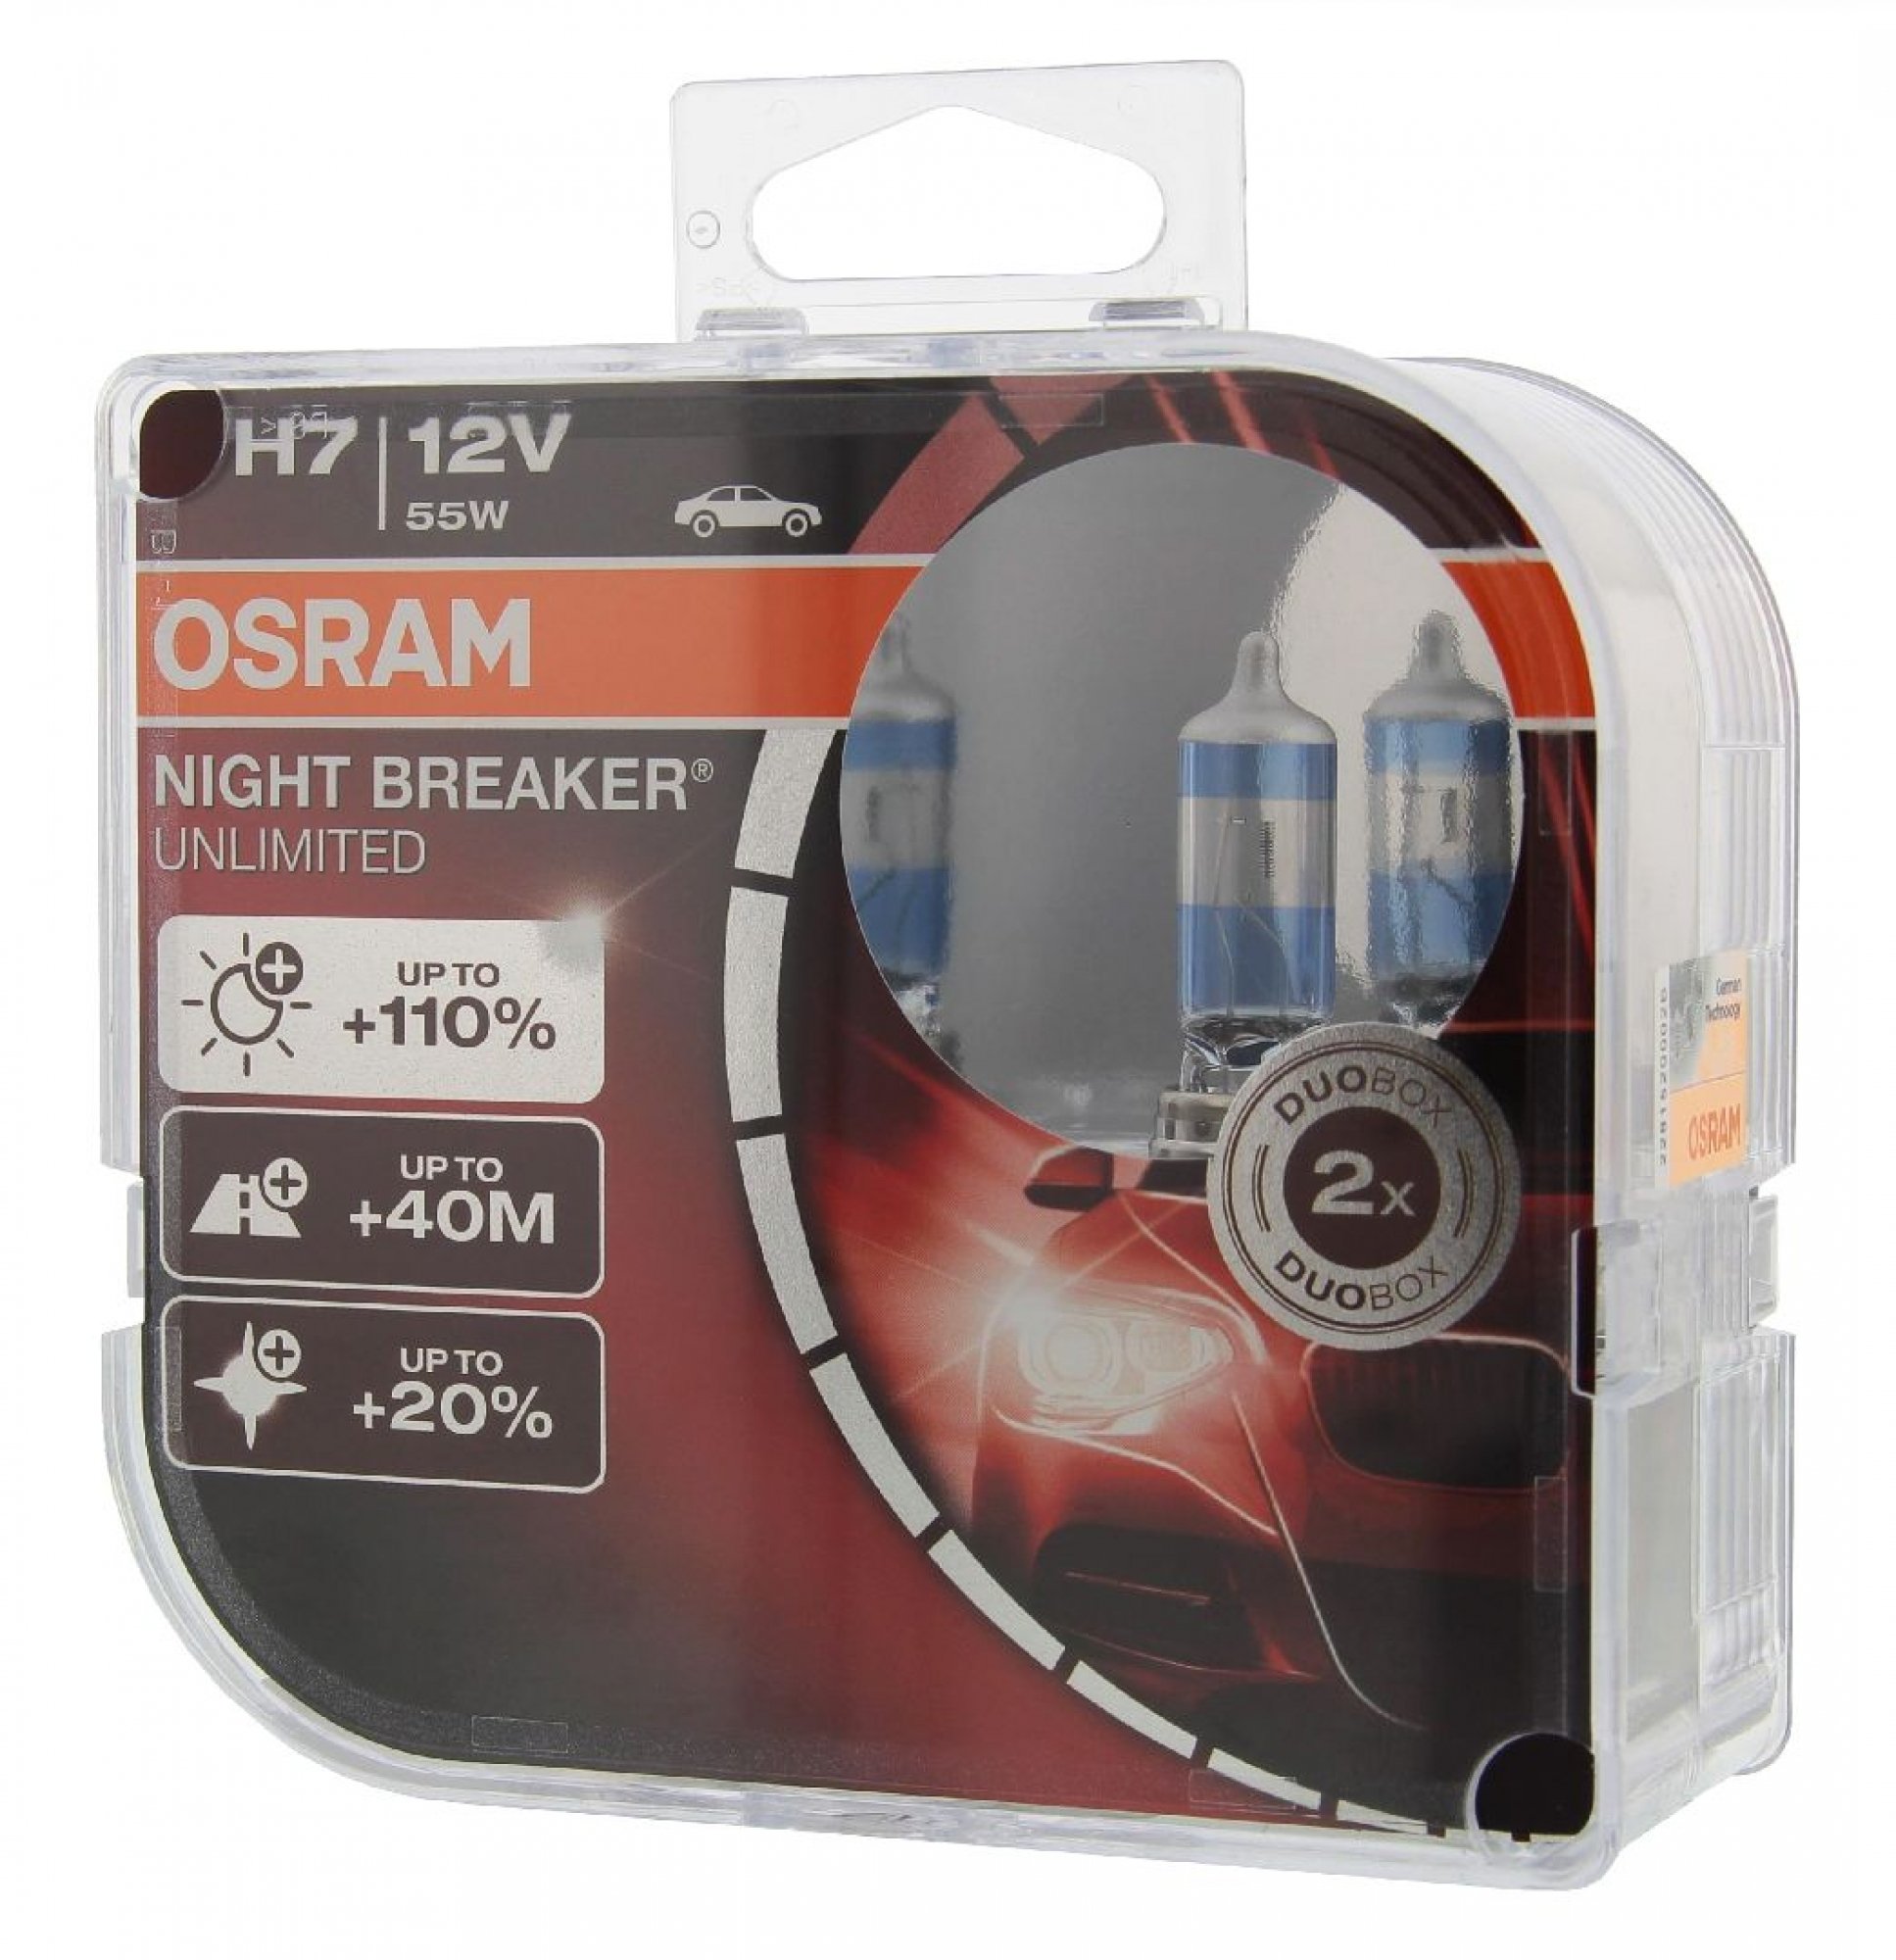 OSRAM NIGHT BREAKER UNLIMITED (64210NBU-HCB), H7, Glühlampe, Fernscheinwerfer